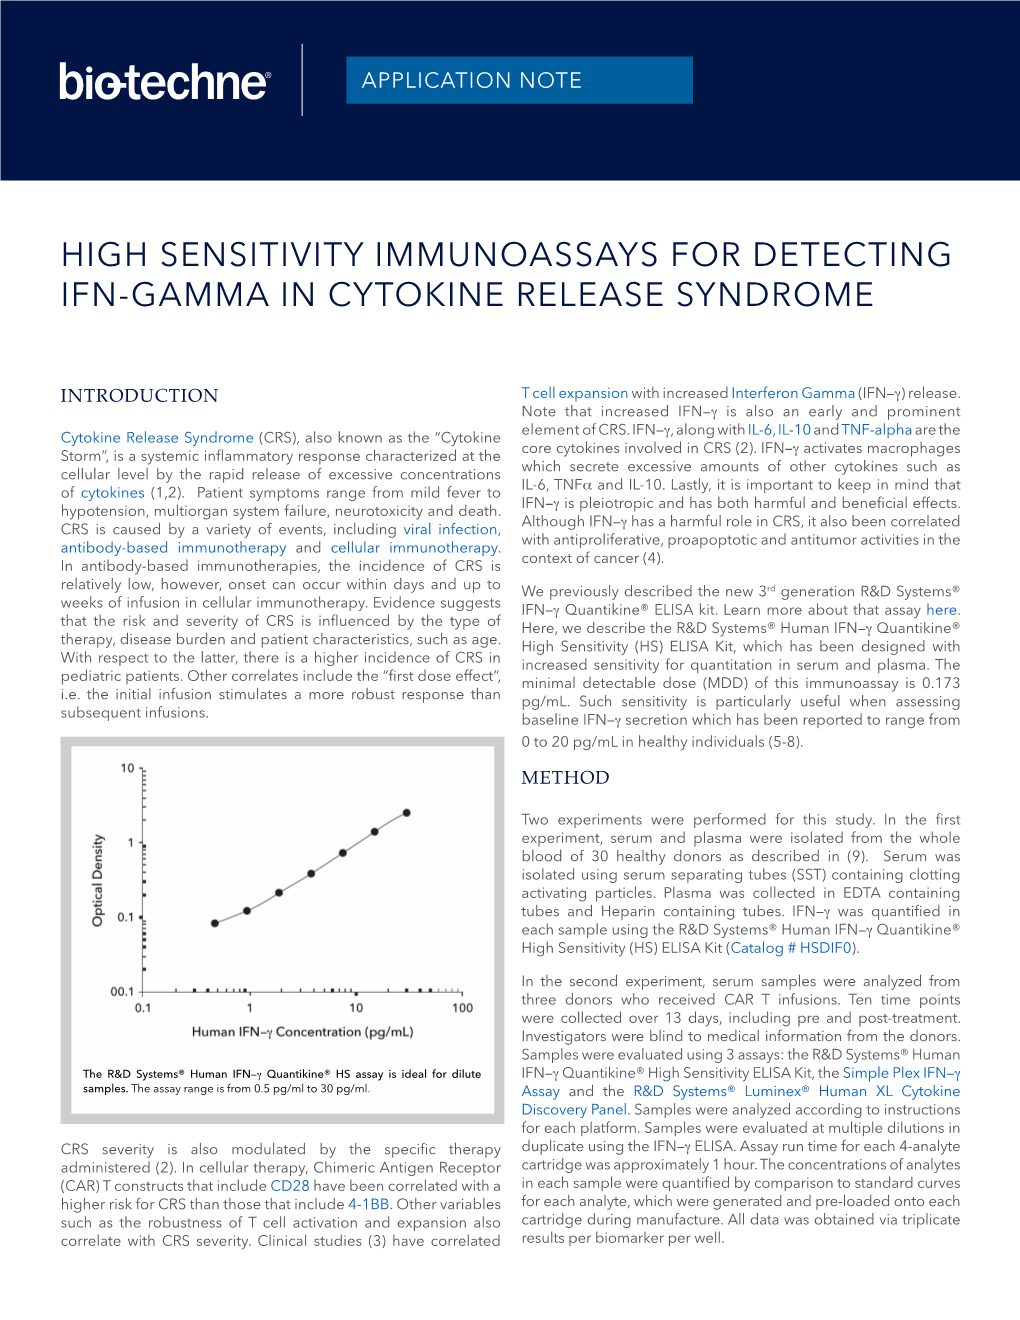 High Sensitivity Immunoassays for Detecting Ifn-Gamma in Cytokine Release Syndrome